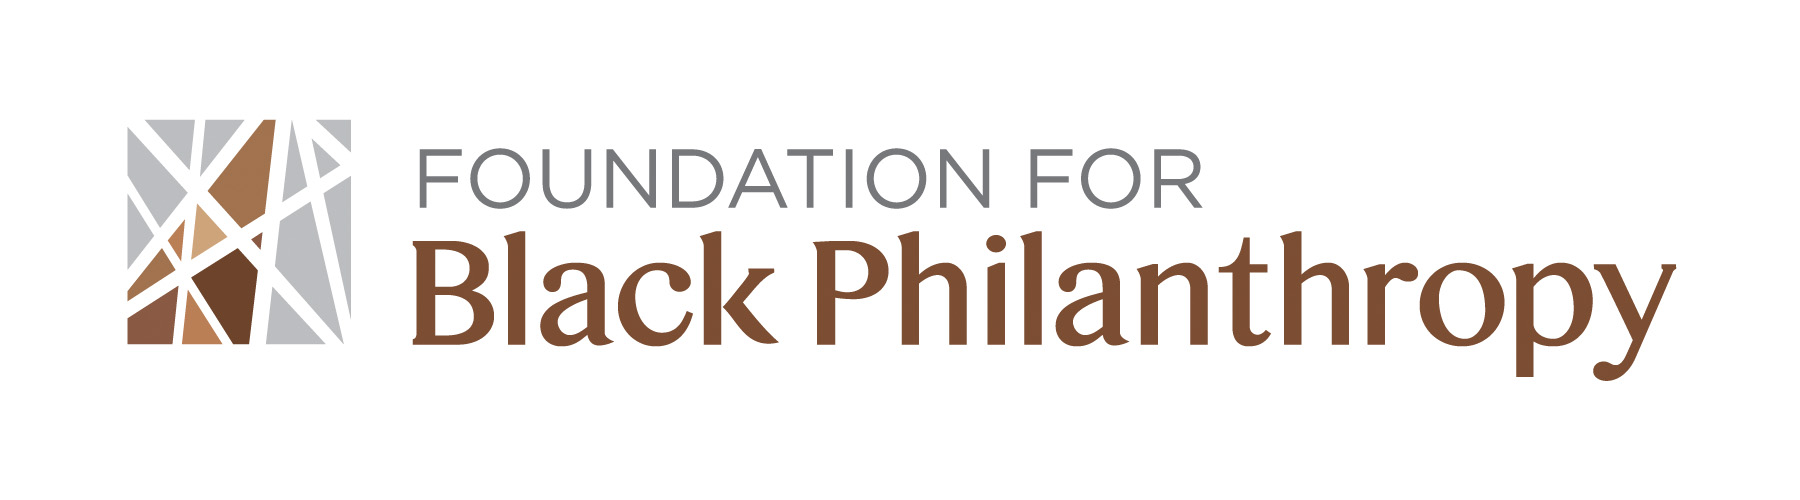 Foundation For Black Philanthropy